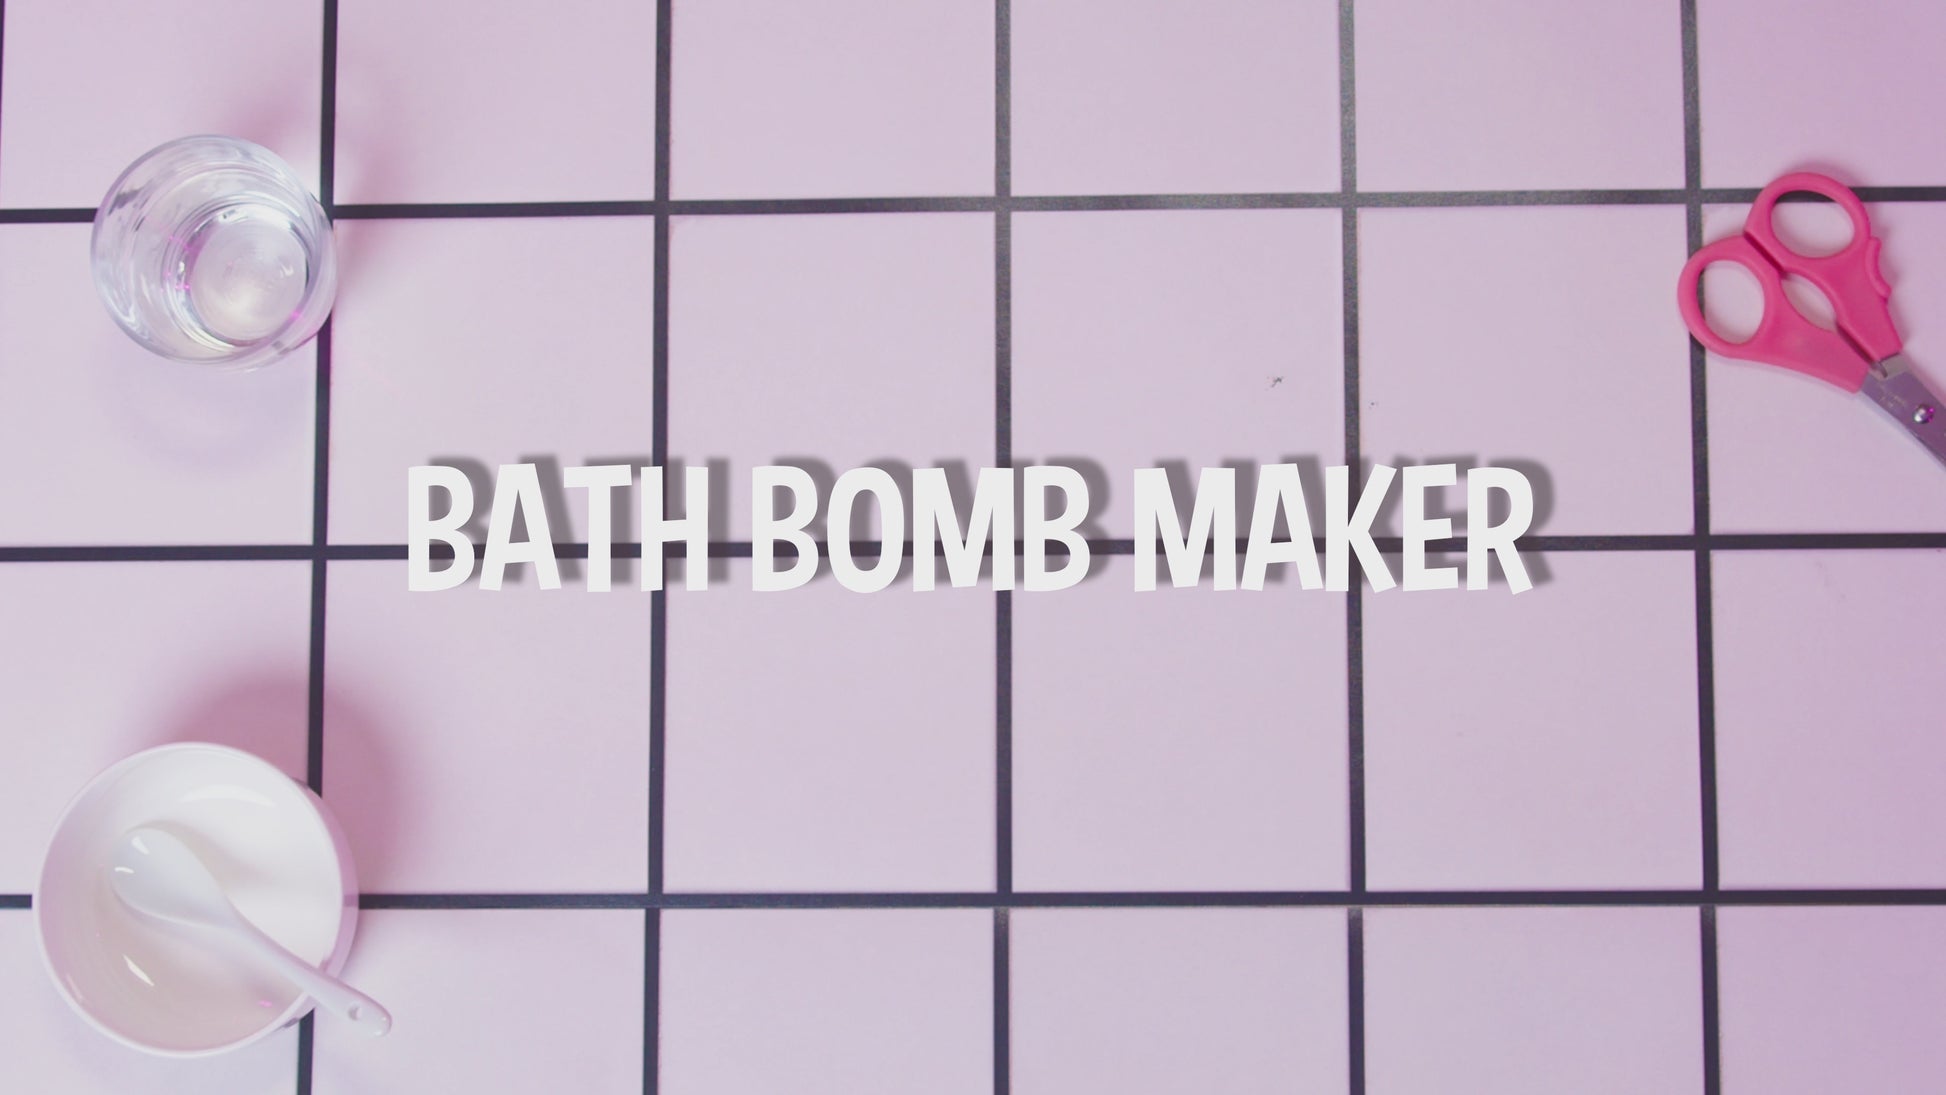 DIY Macaron Bath Bomb Kit Endless Creativity Craft Kids Childrens Gift